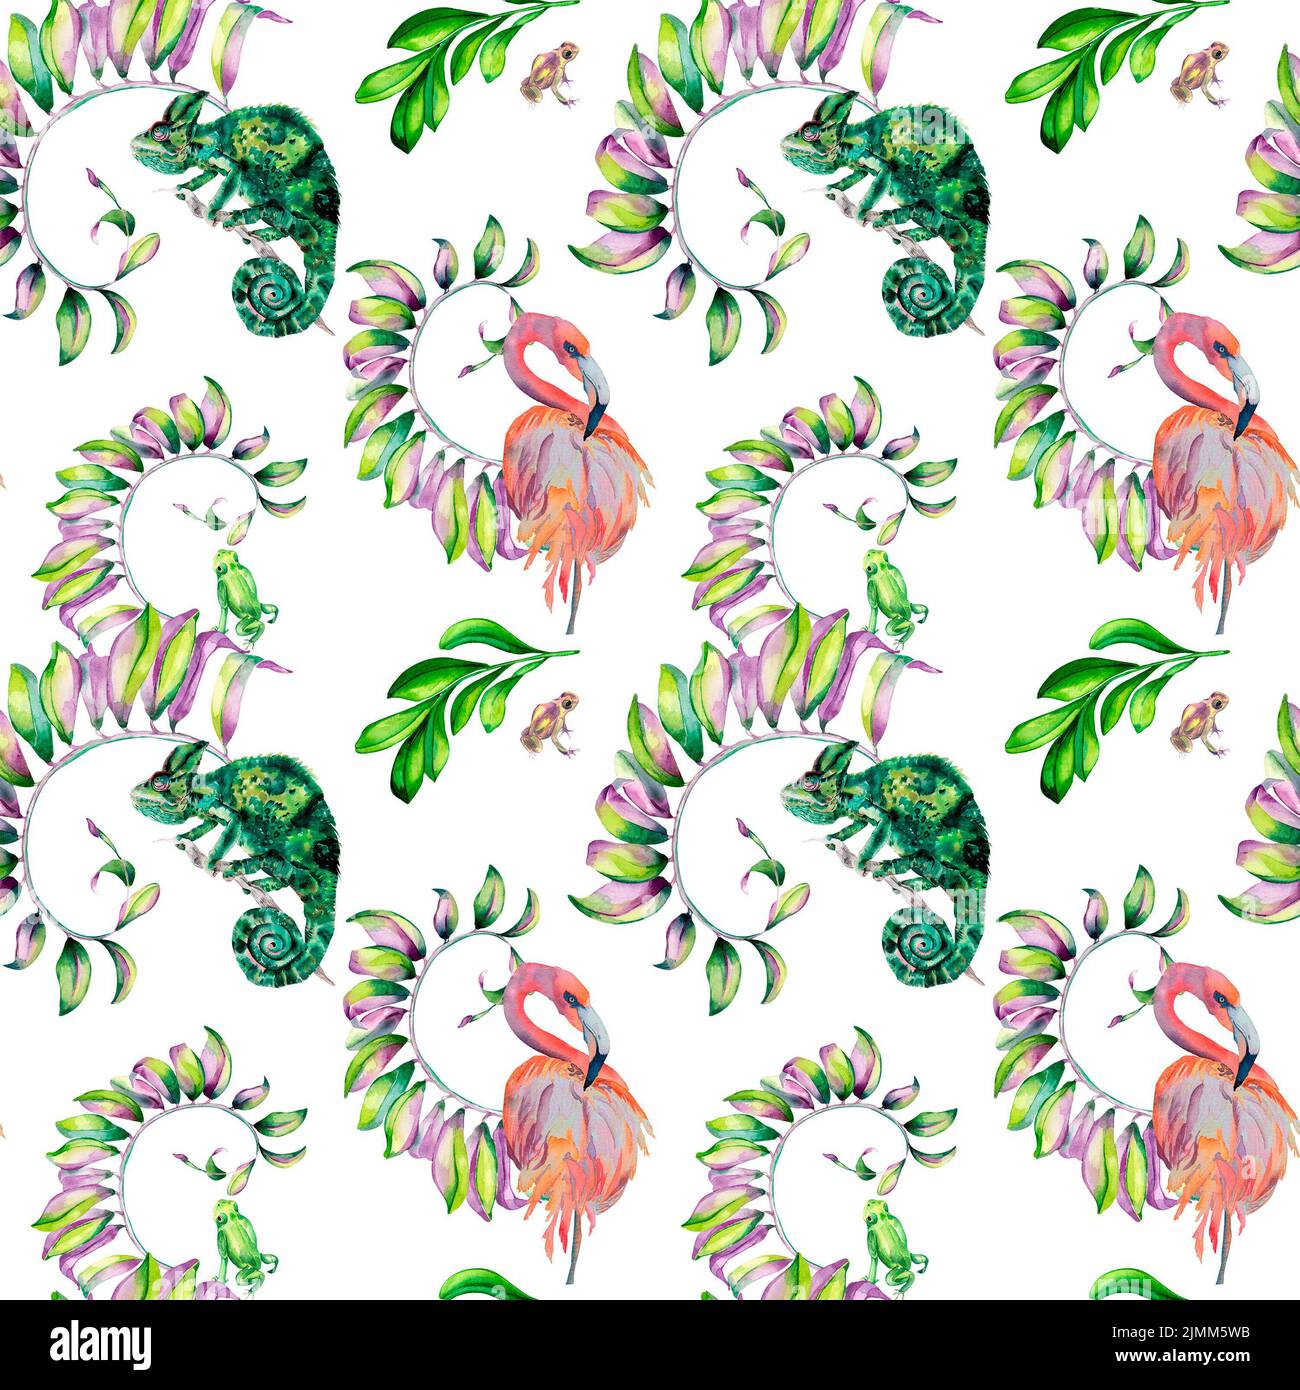 Animales exóticos con ornamentación floral acuarela ilustración sin costuras patrón sobre blanco. Flamenco pájaro tropical, camaleón pintado a mano. Diseño para tela Foto de stock